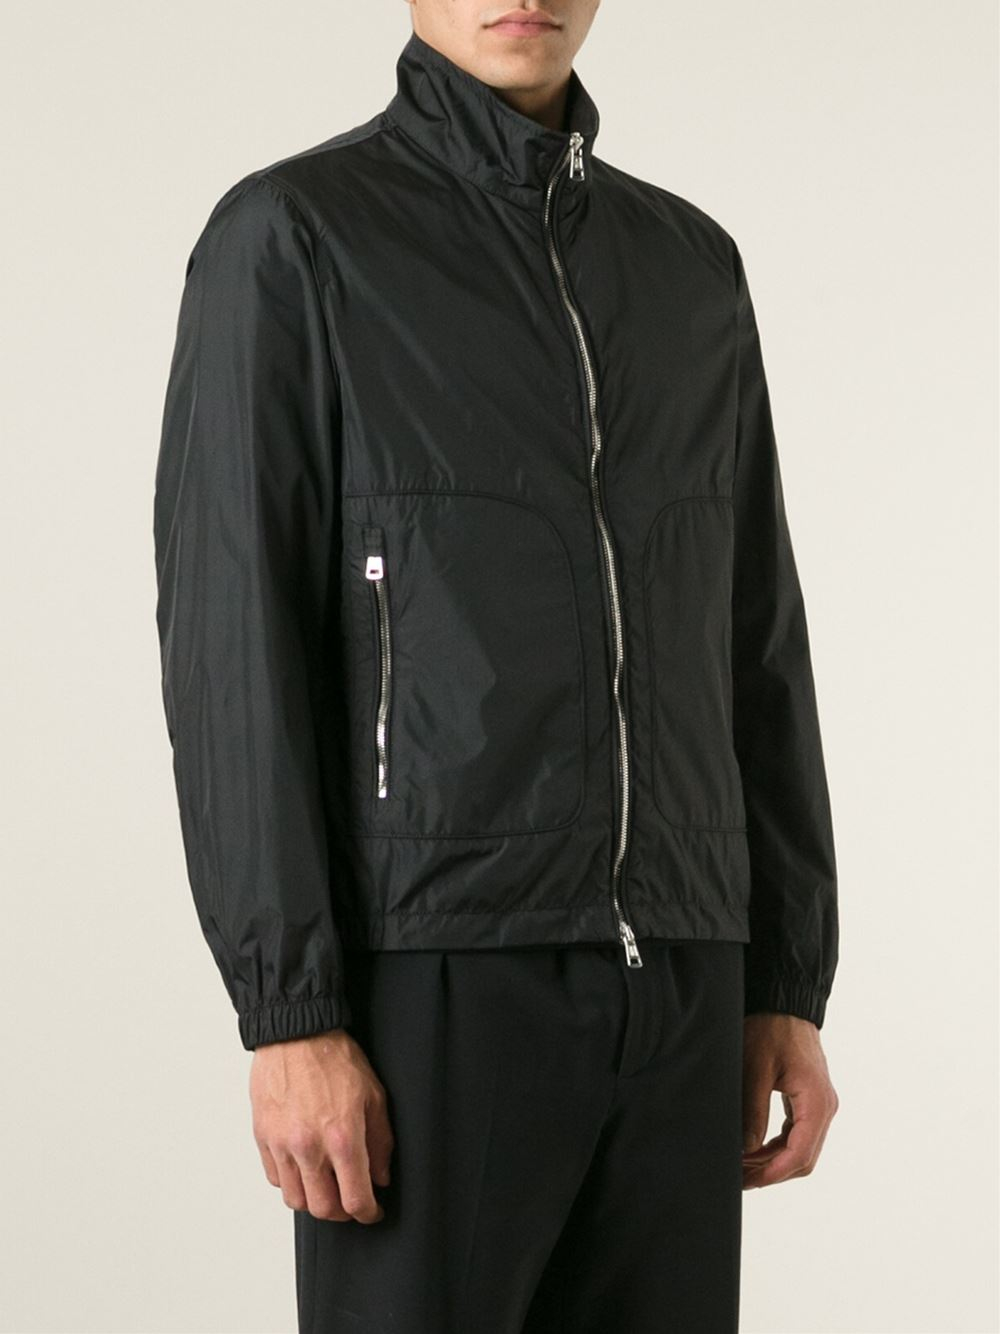 Moncler 'Renoir' Windbreaker Jacket in Black for Men - Lyst